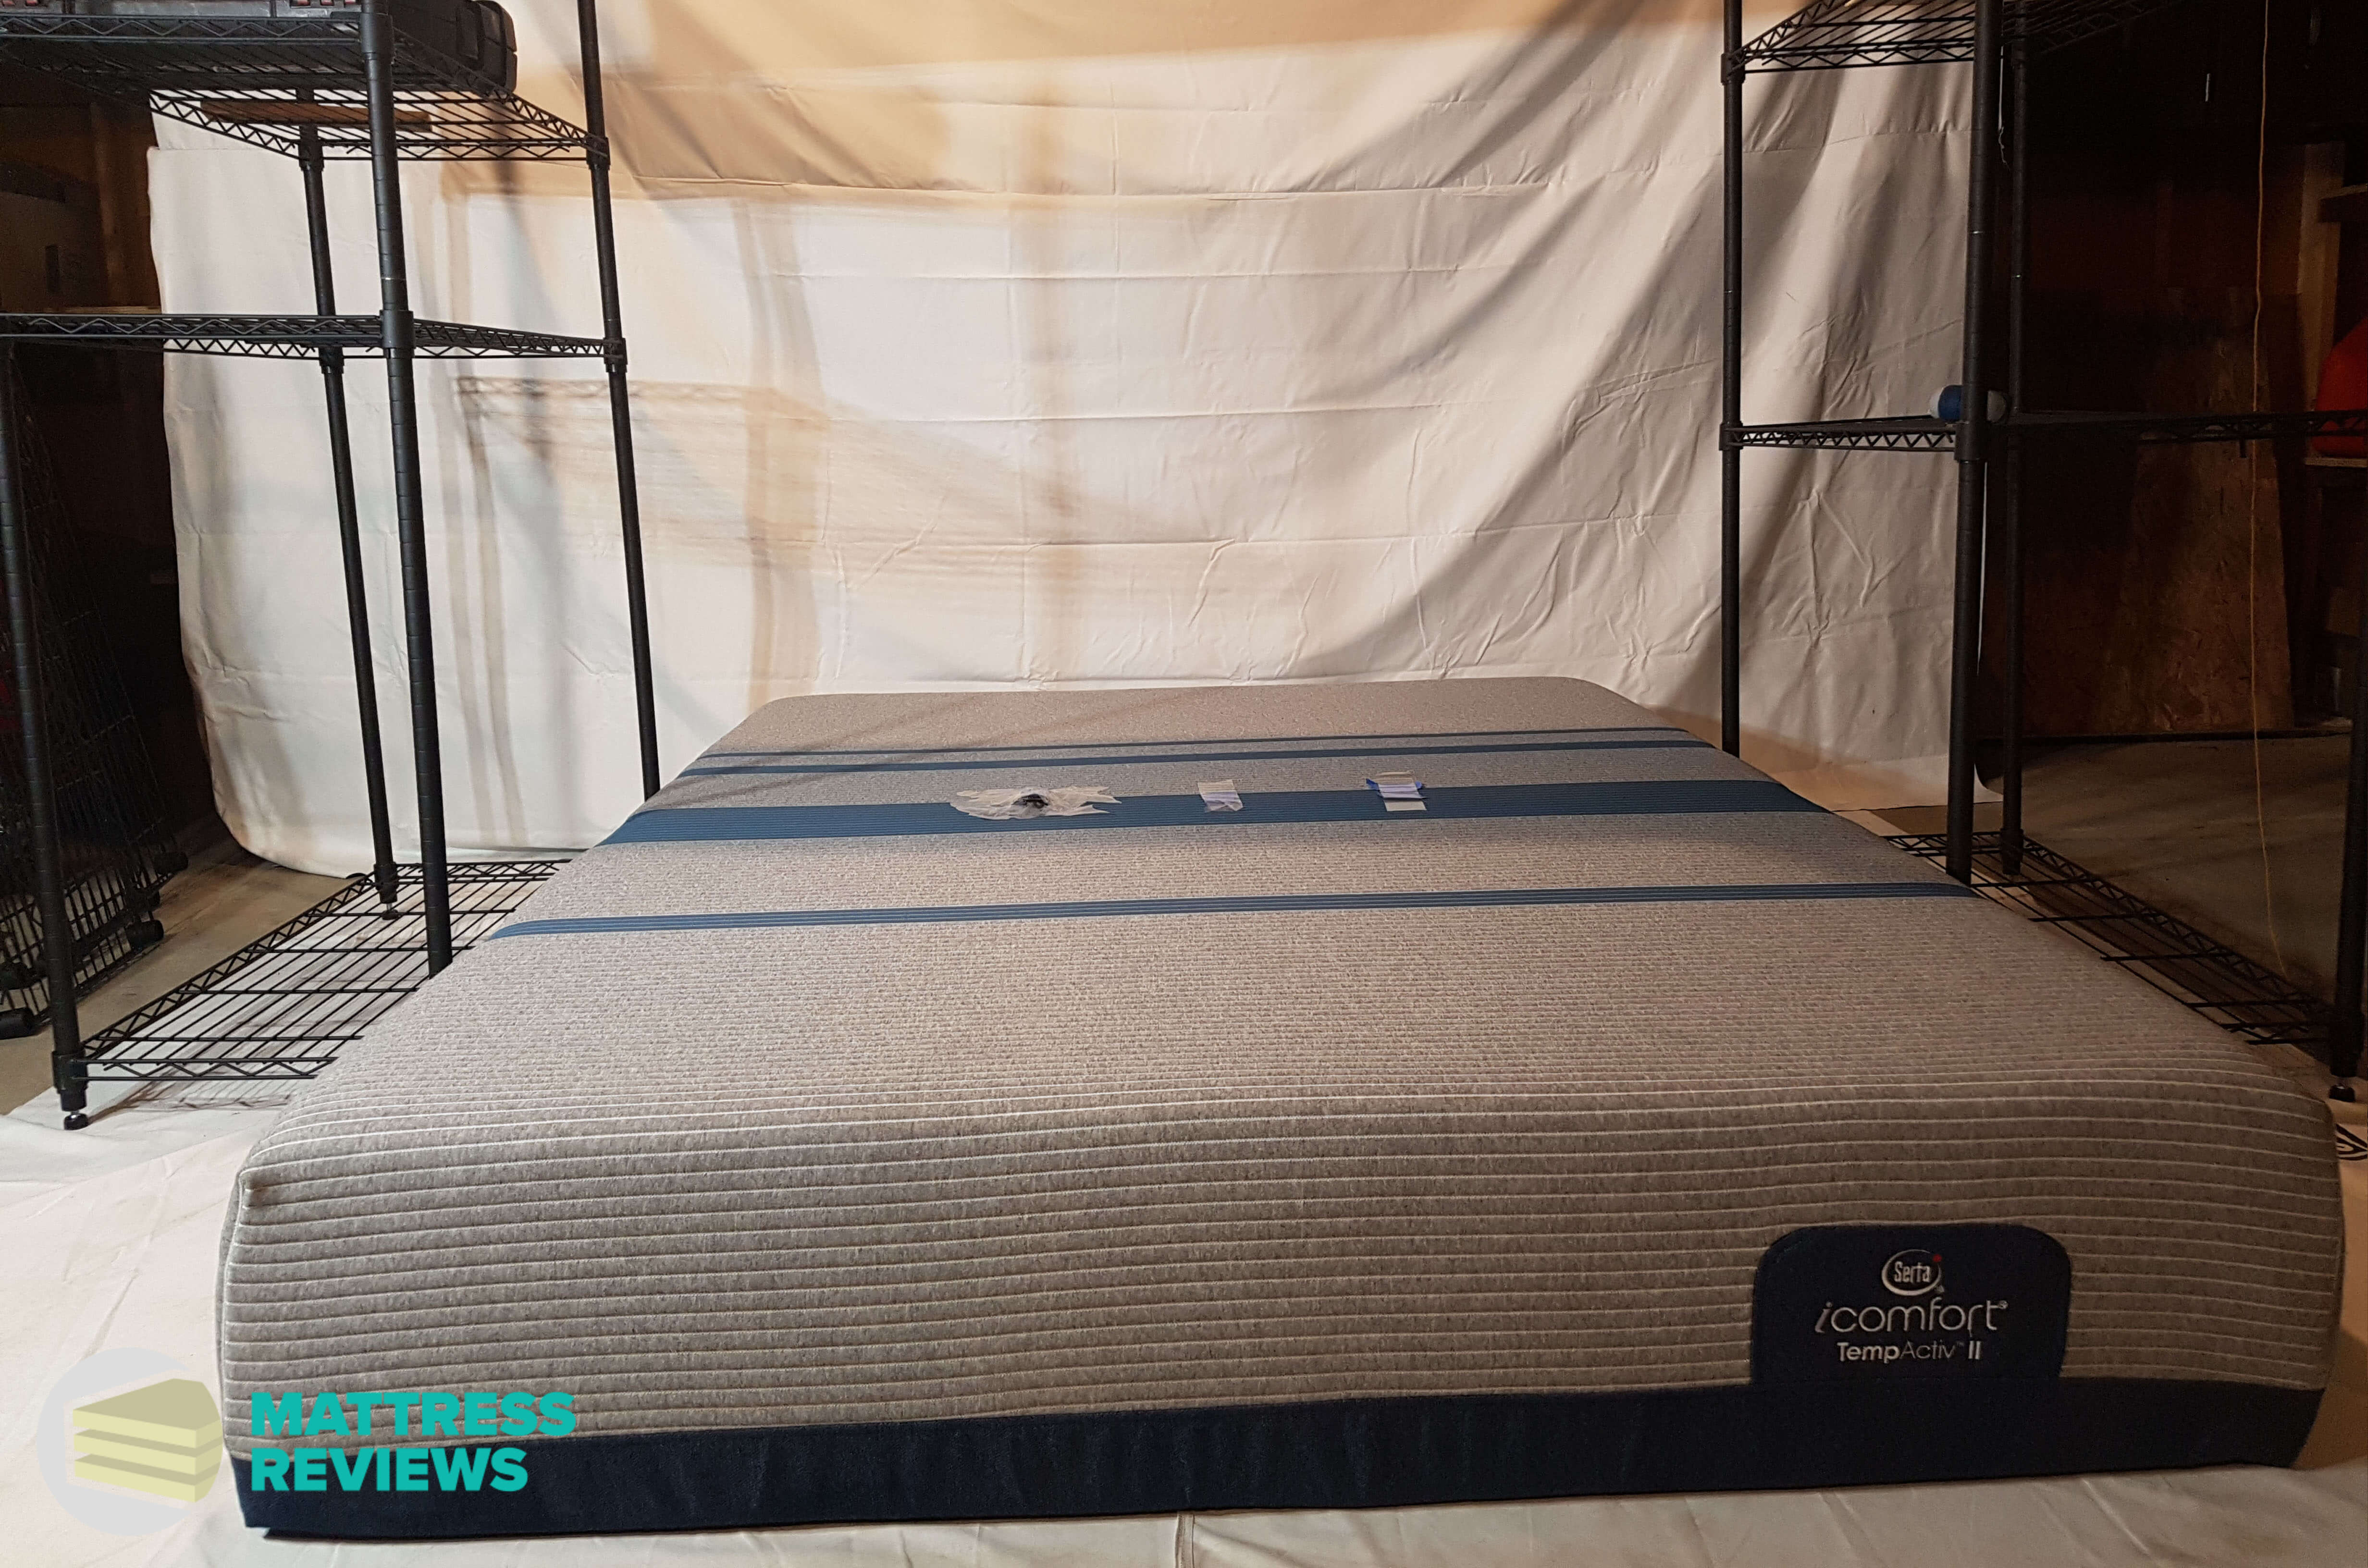 Image of the Serta iComfort TempActiv II mattress motion isolation test.